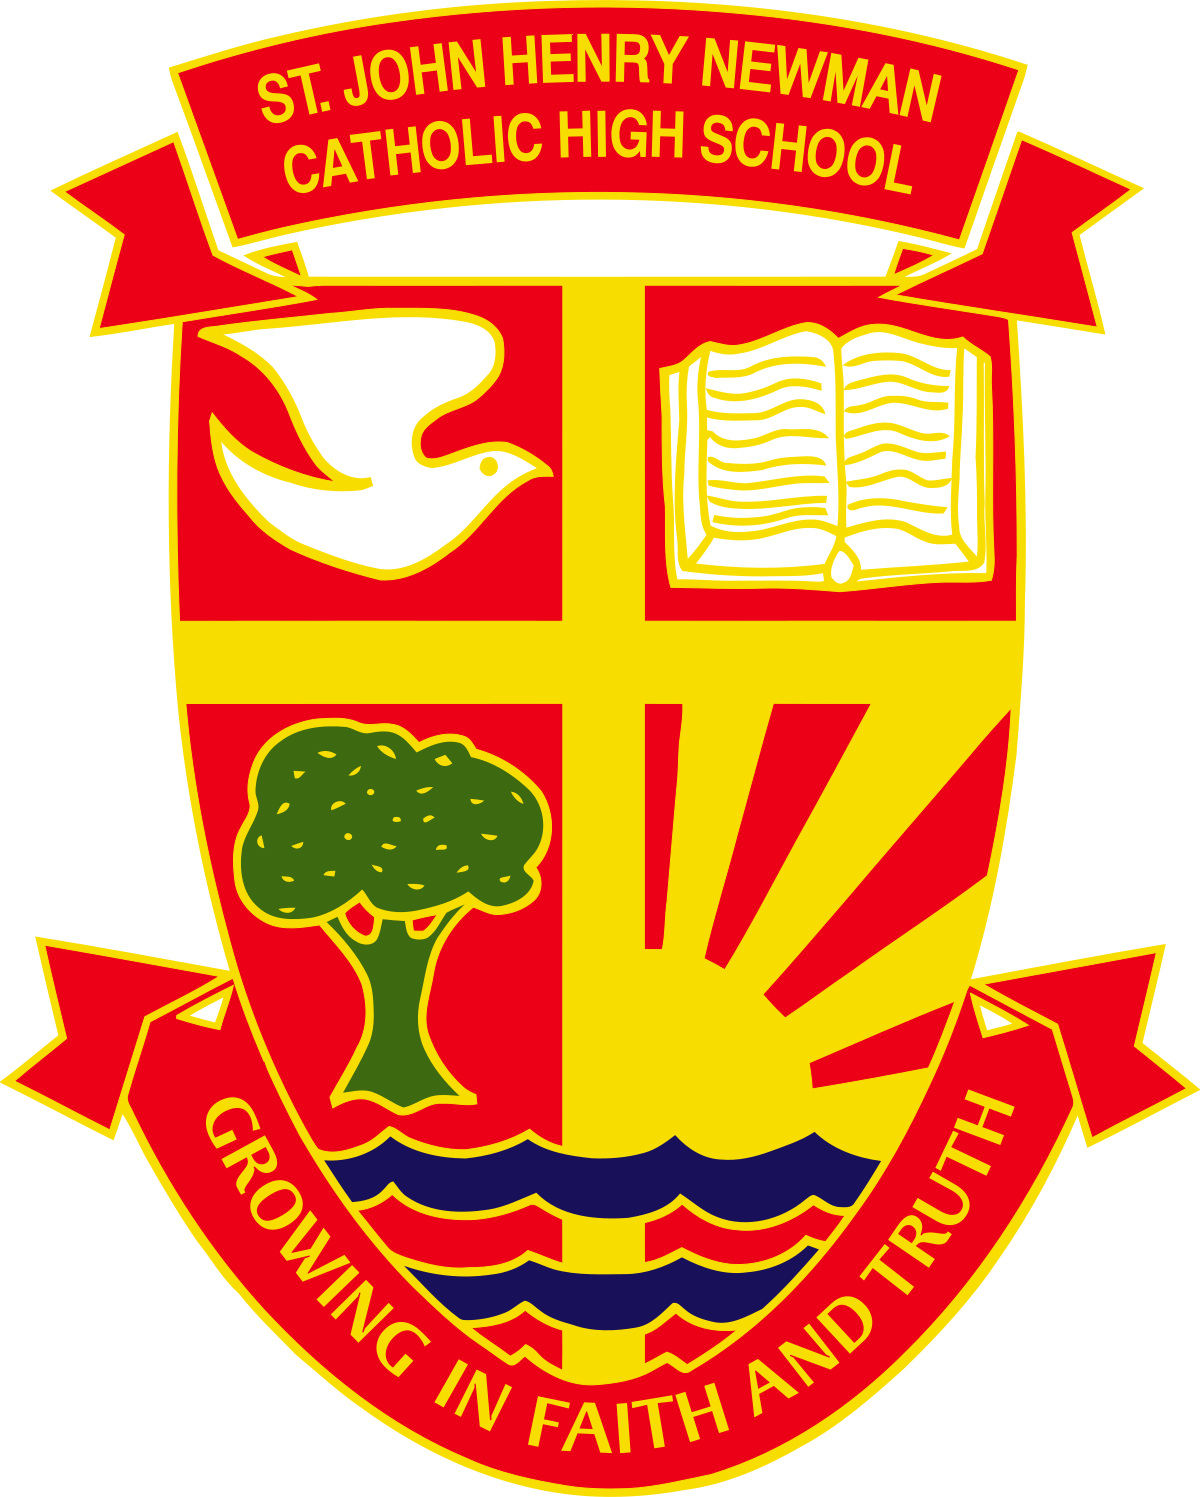 St. John Henry Newman Catholic High School